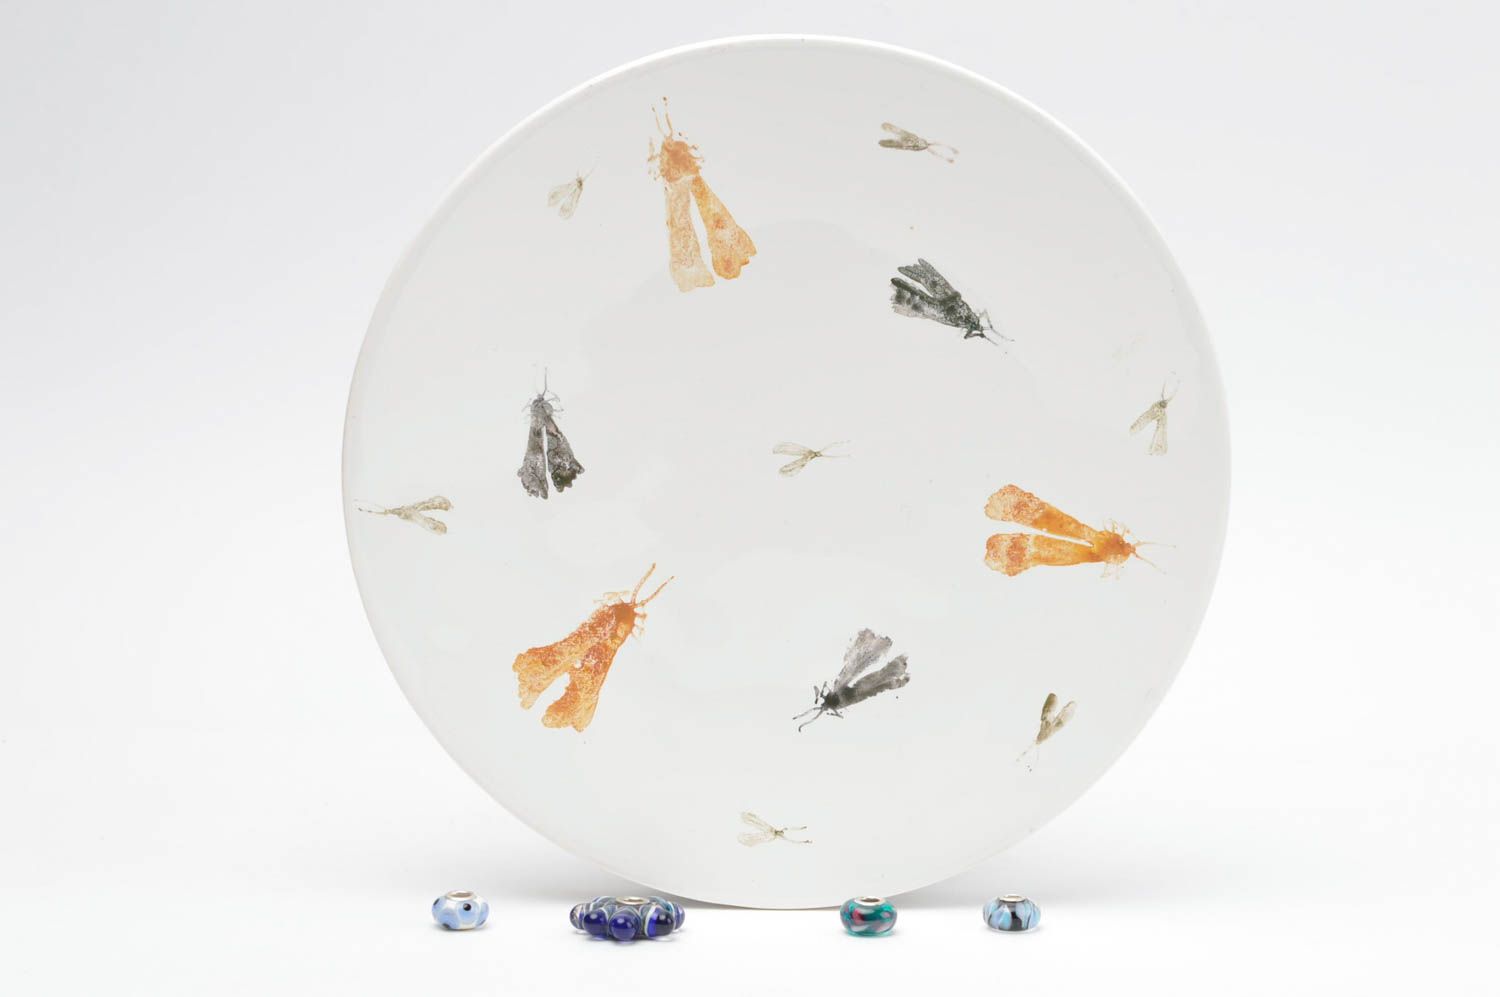 Handmade plate designer plate unusual dishes kitchen interior ceramic plate photo 1